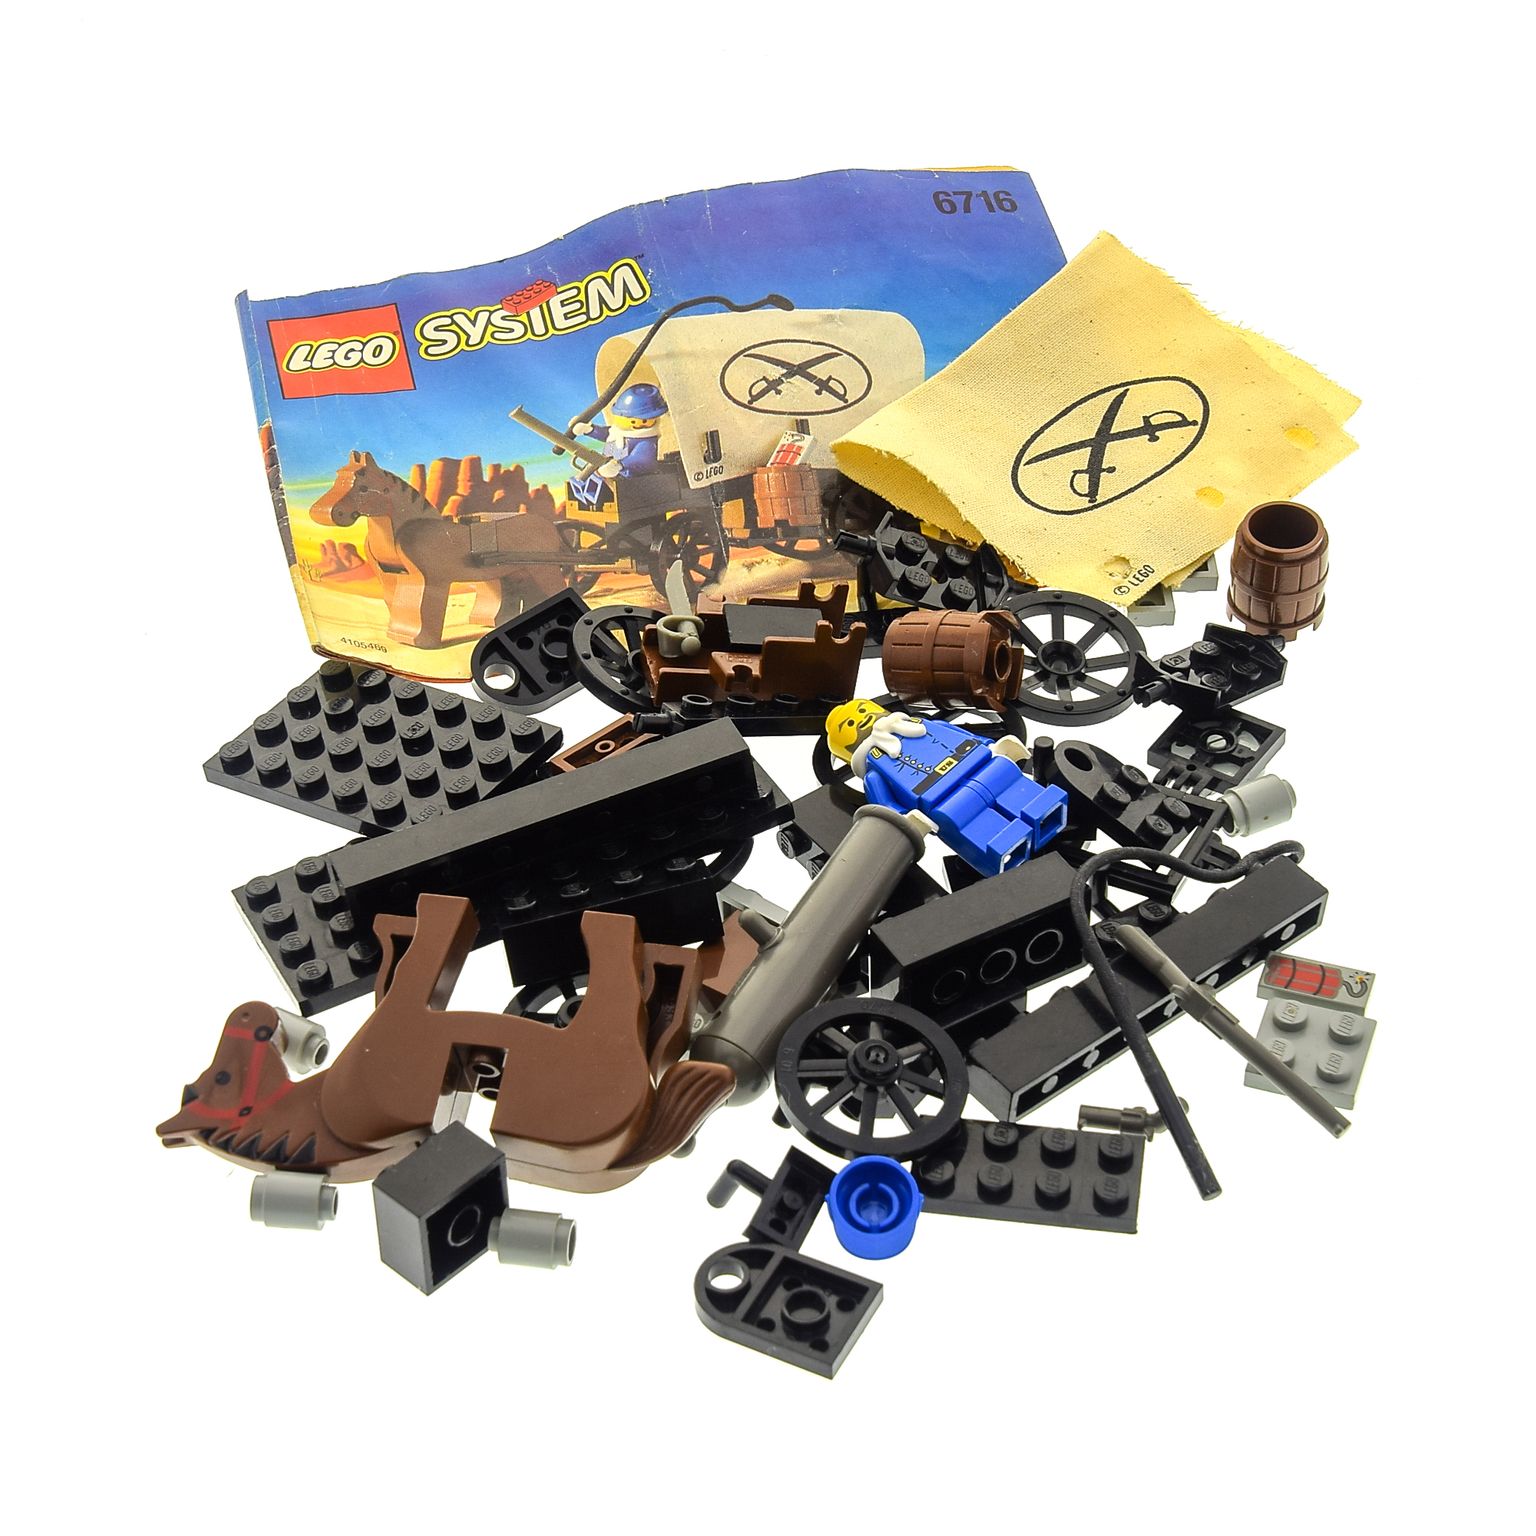 1 x Lego System Set Modell 6716 Western Cowboys Weapons Wagon